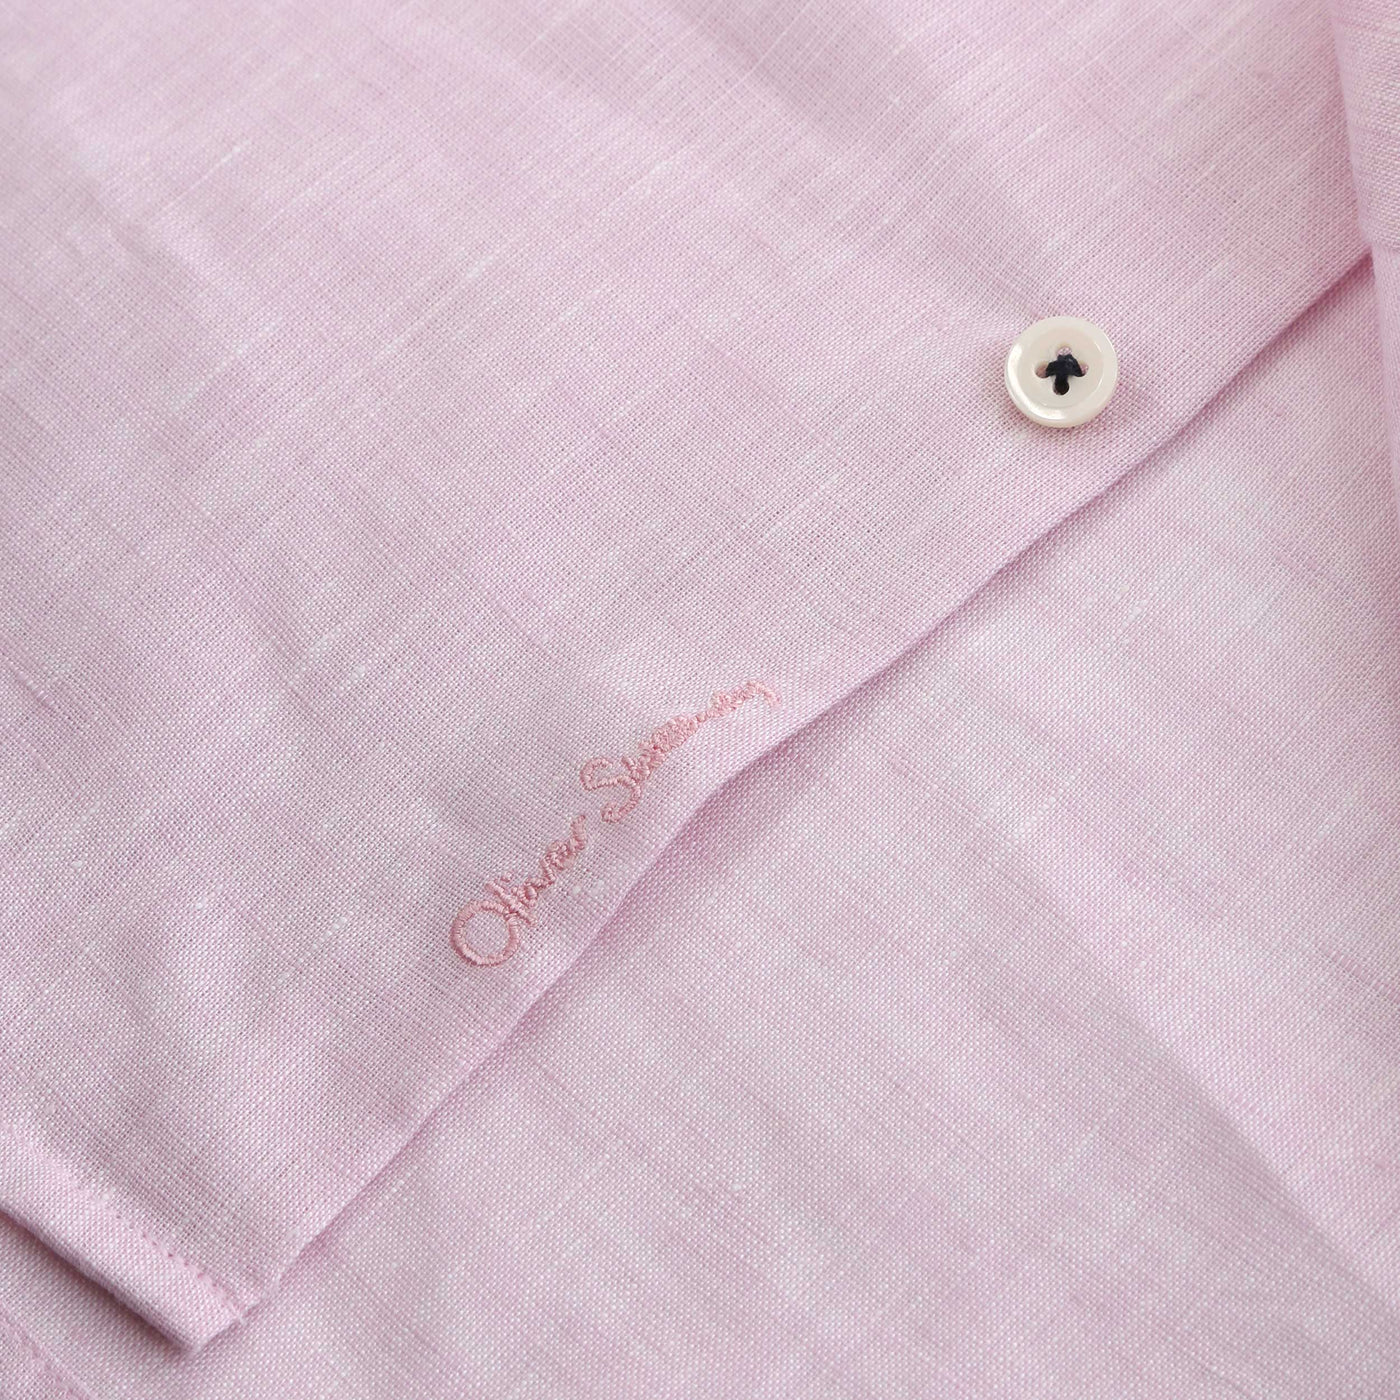 Oliver Sweeney Eakring SS Shirt in Pink Logo